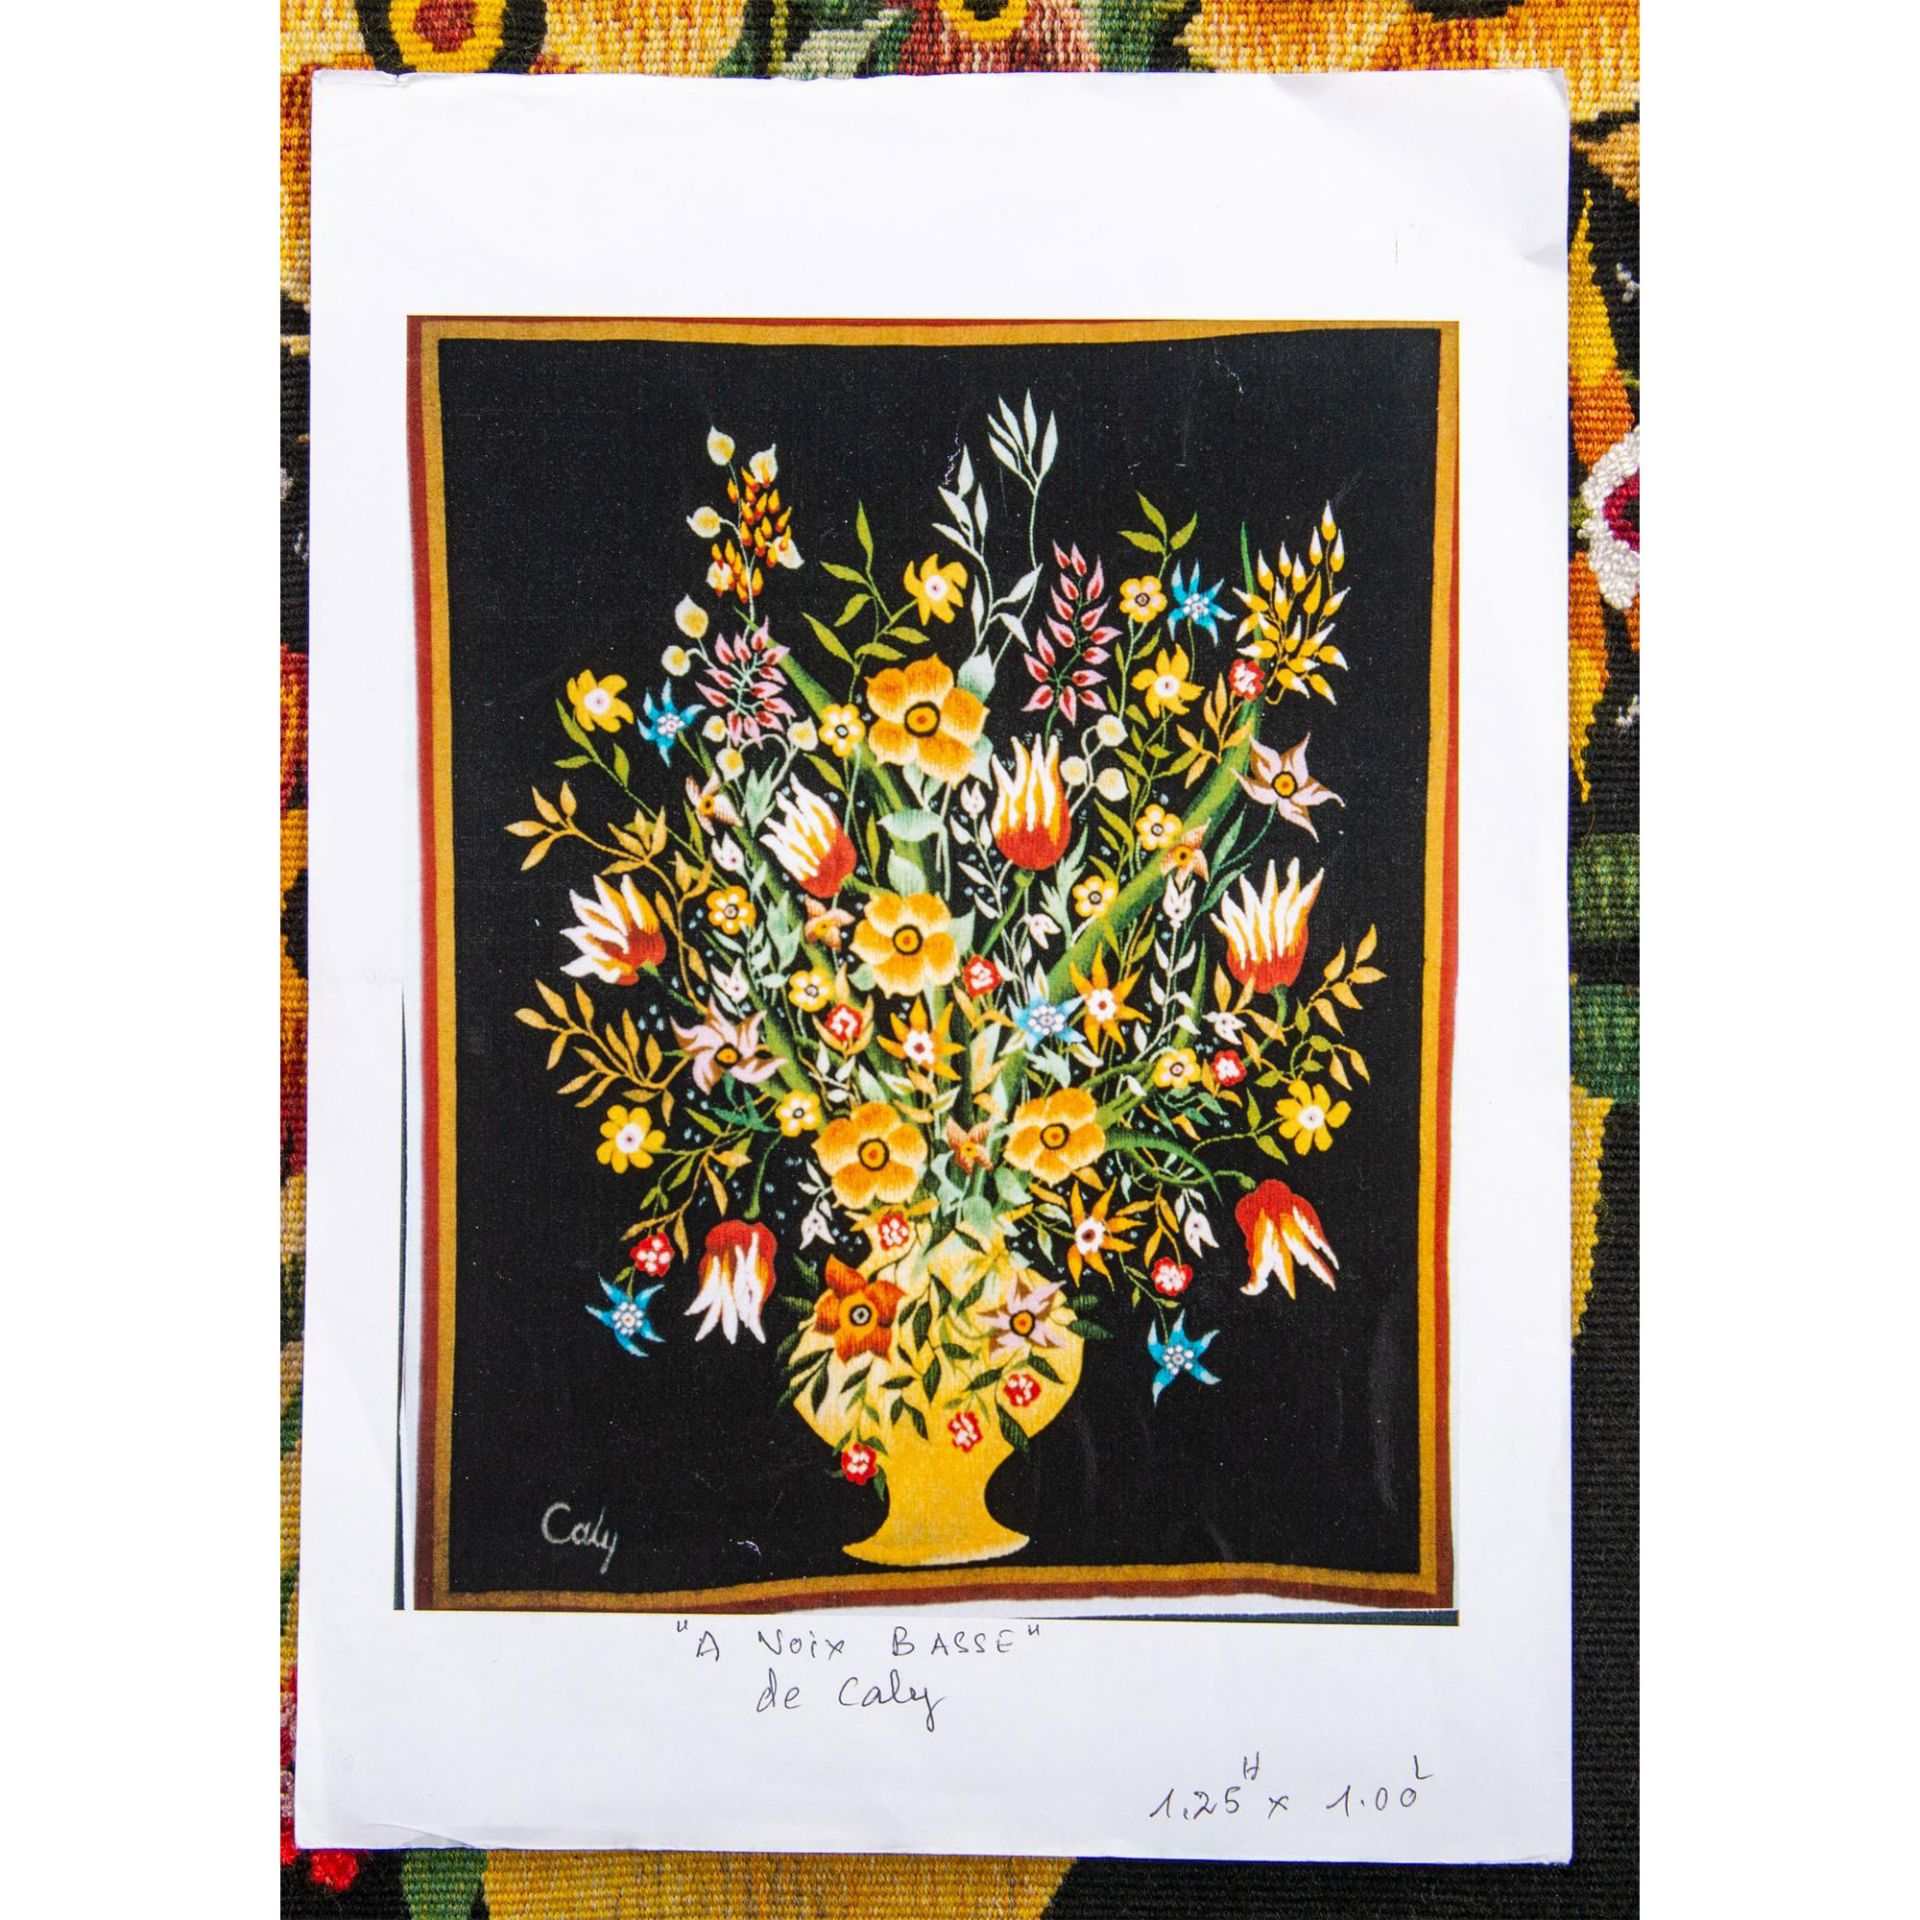 Caly Odette Aubusson Tapestry, A Voix Basse - Bild 8 aus 11